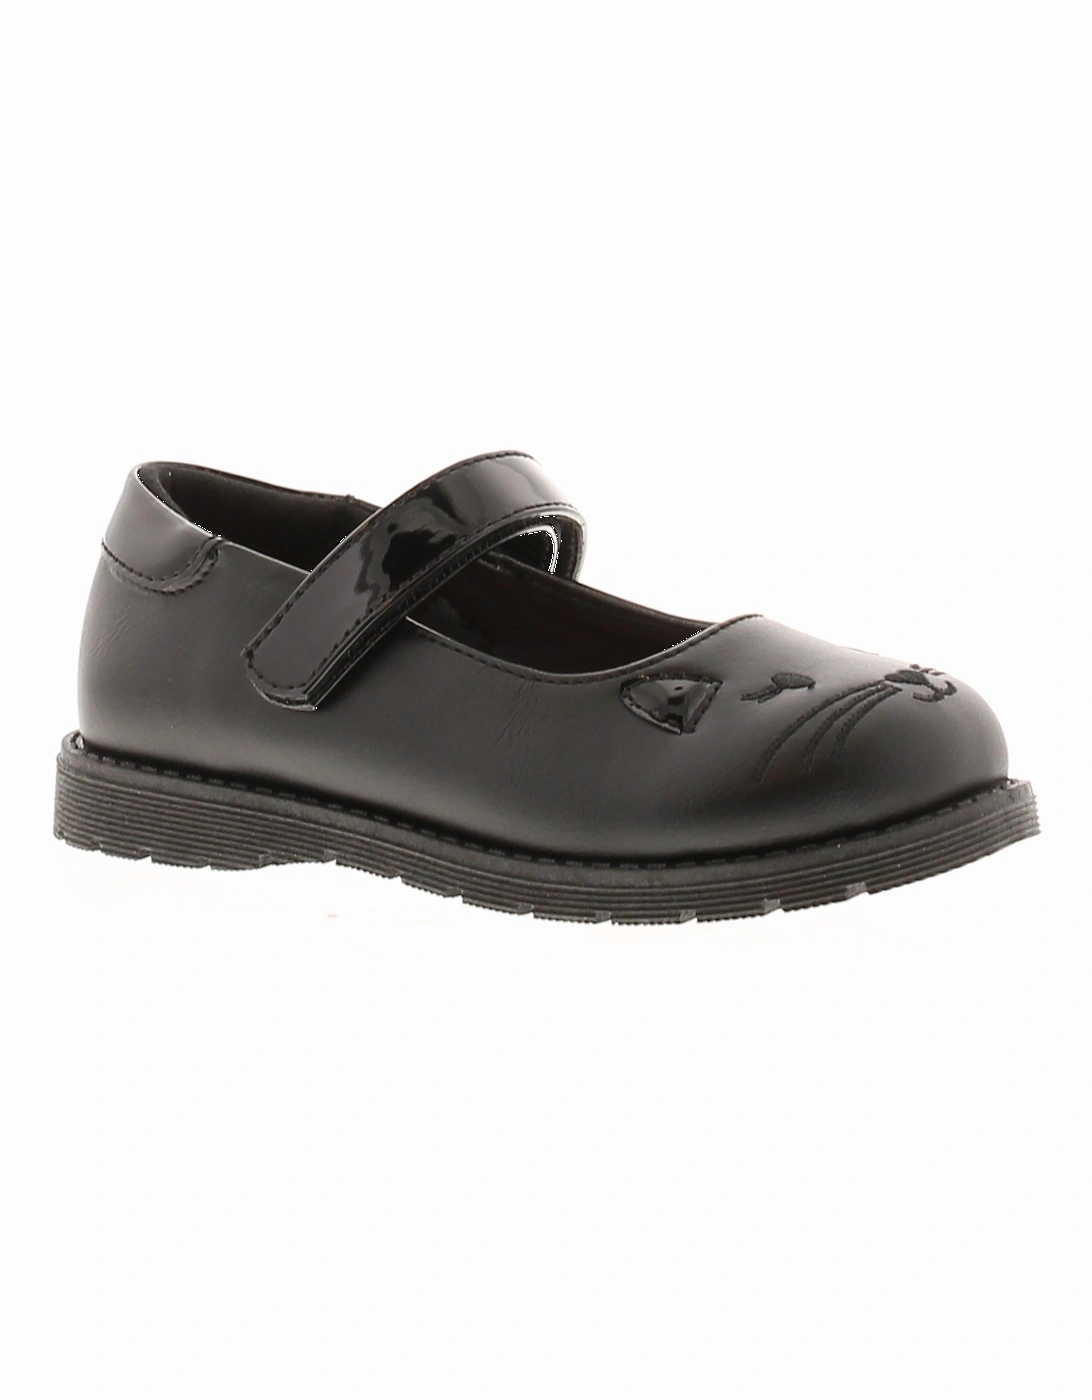 Girls Shoes School Infants Candy black UK Size, 6 of 5